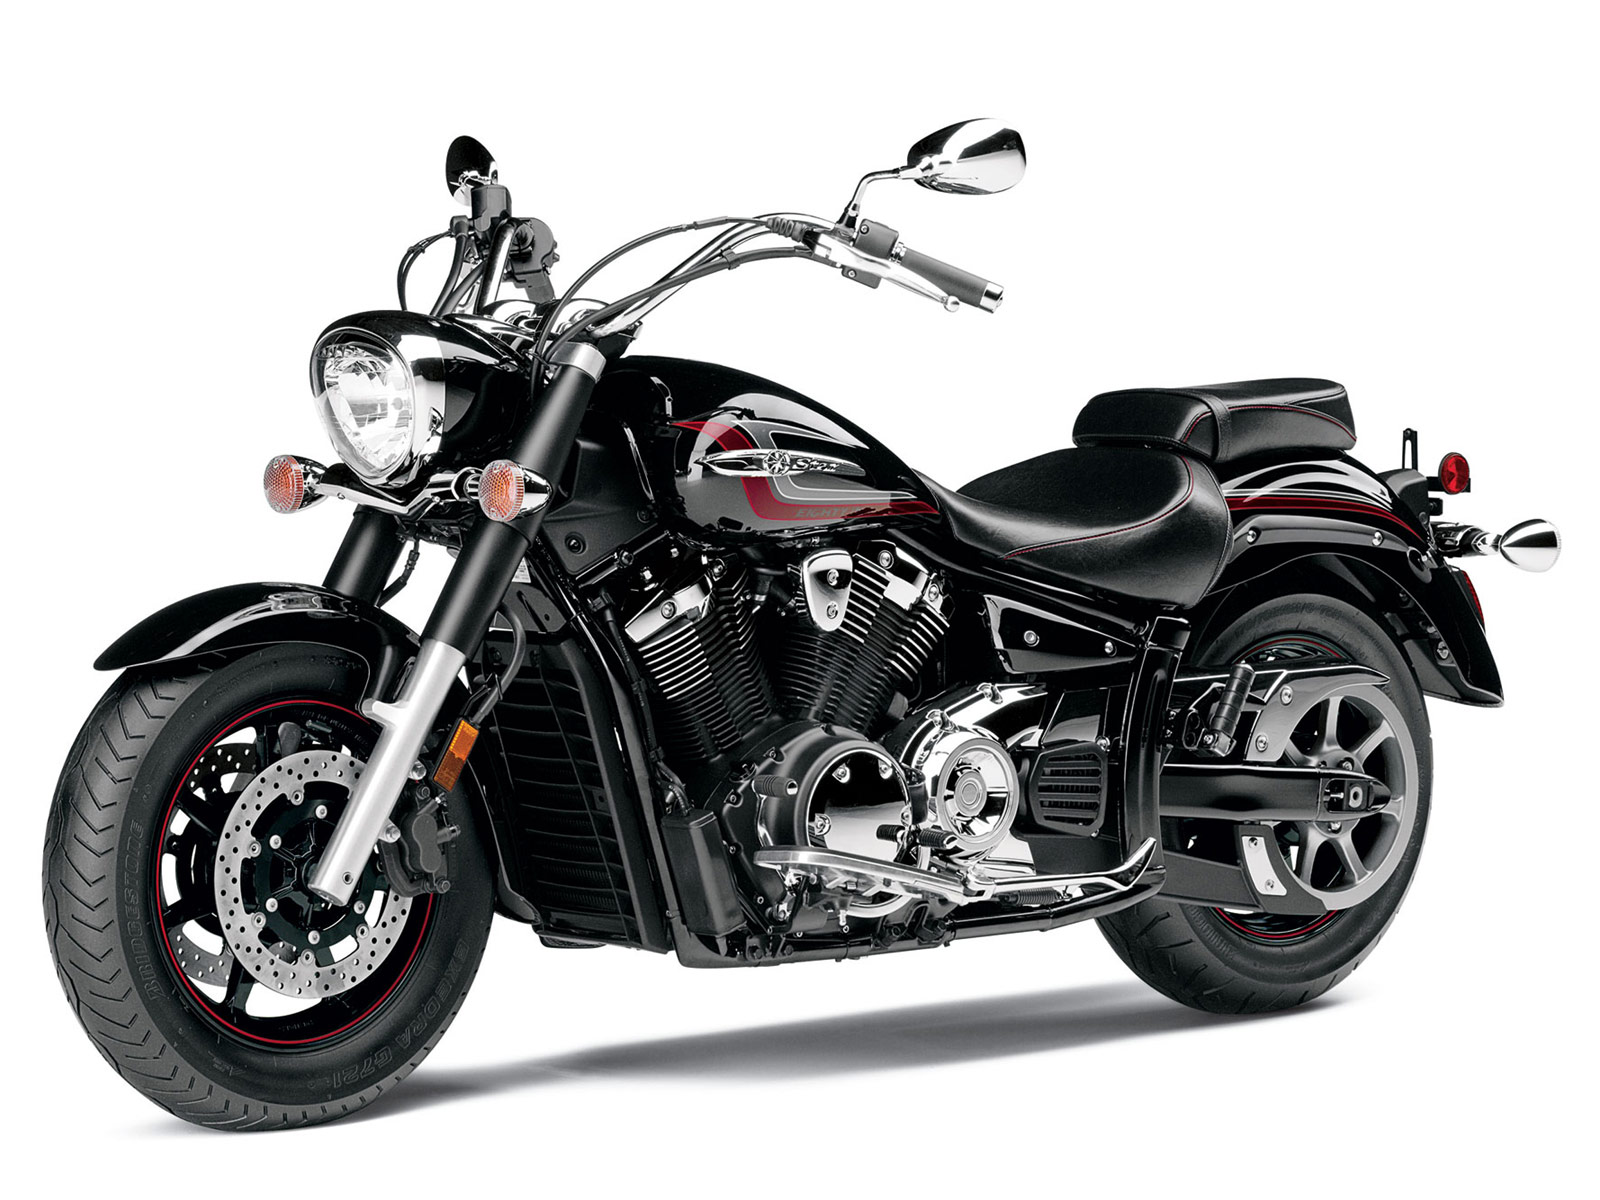 2013 Yamaha VStar 1300 insurance information, Motorcycle